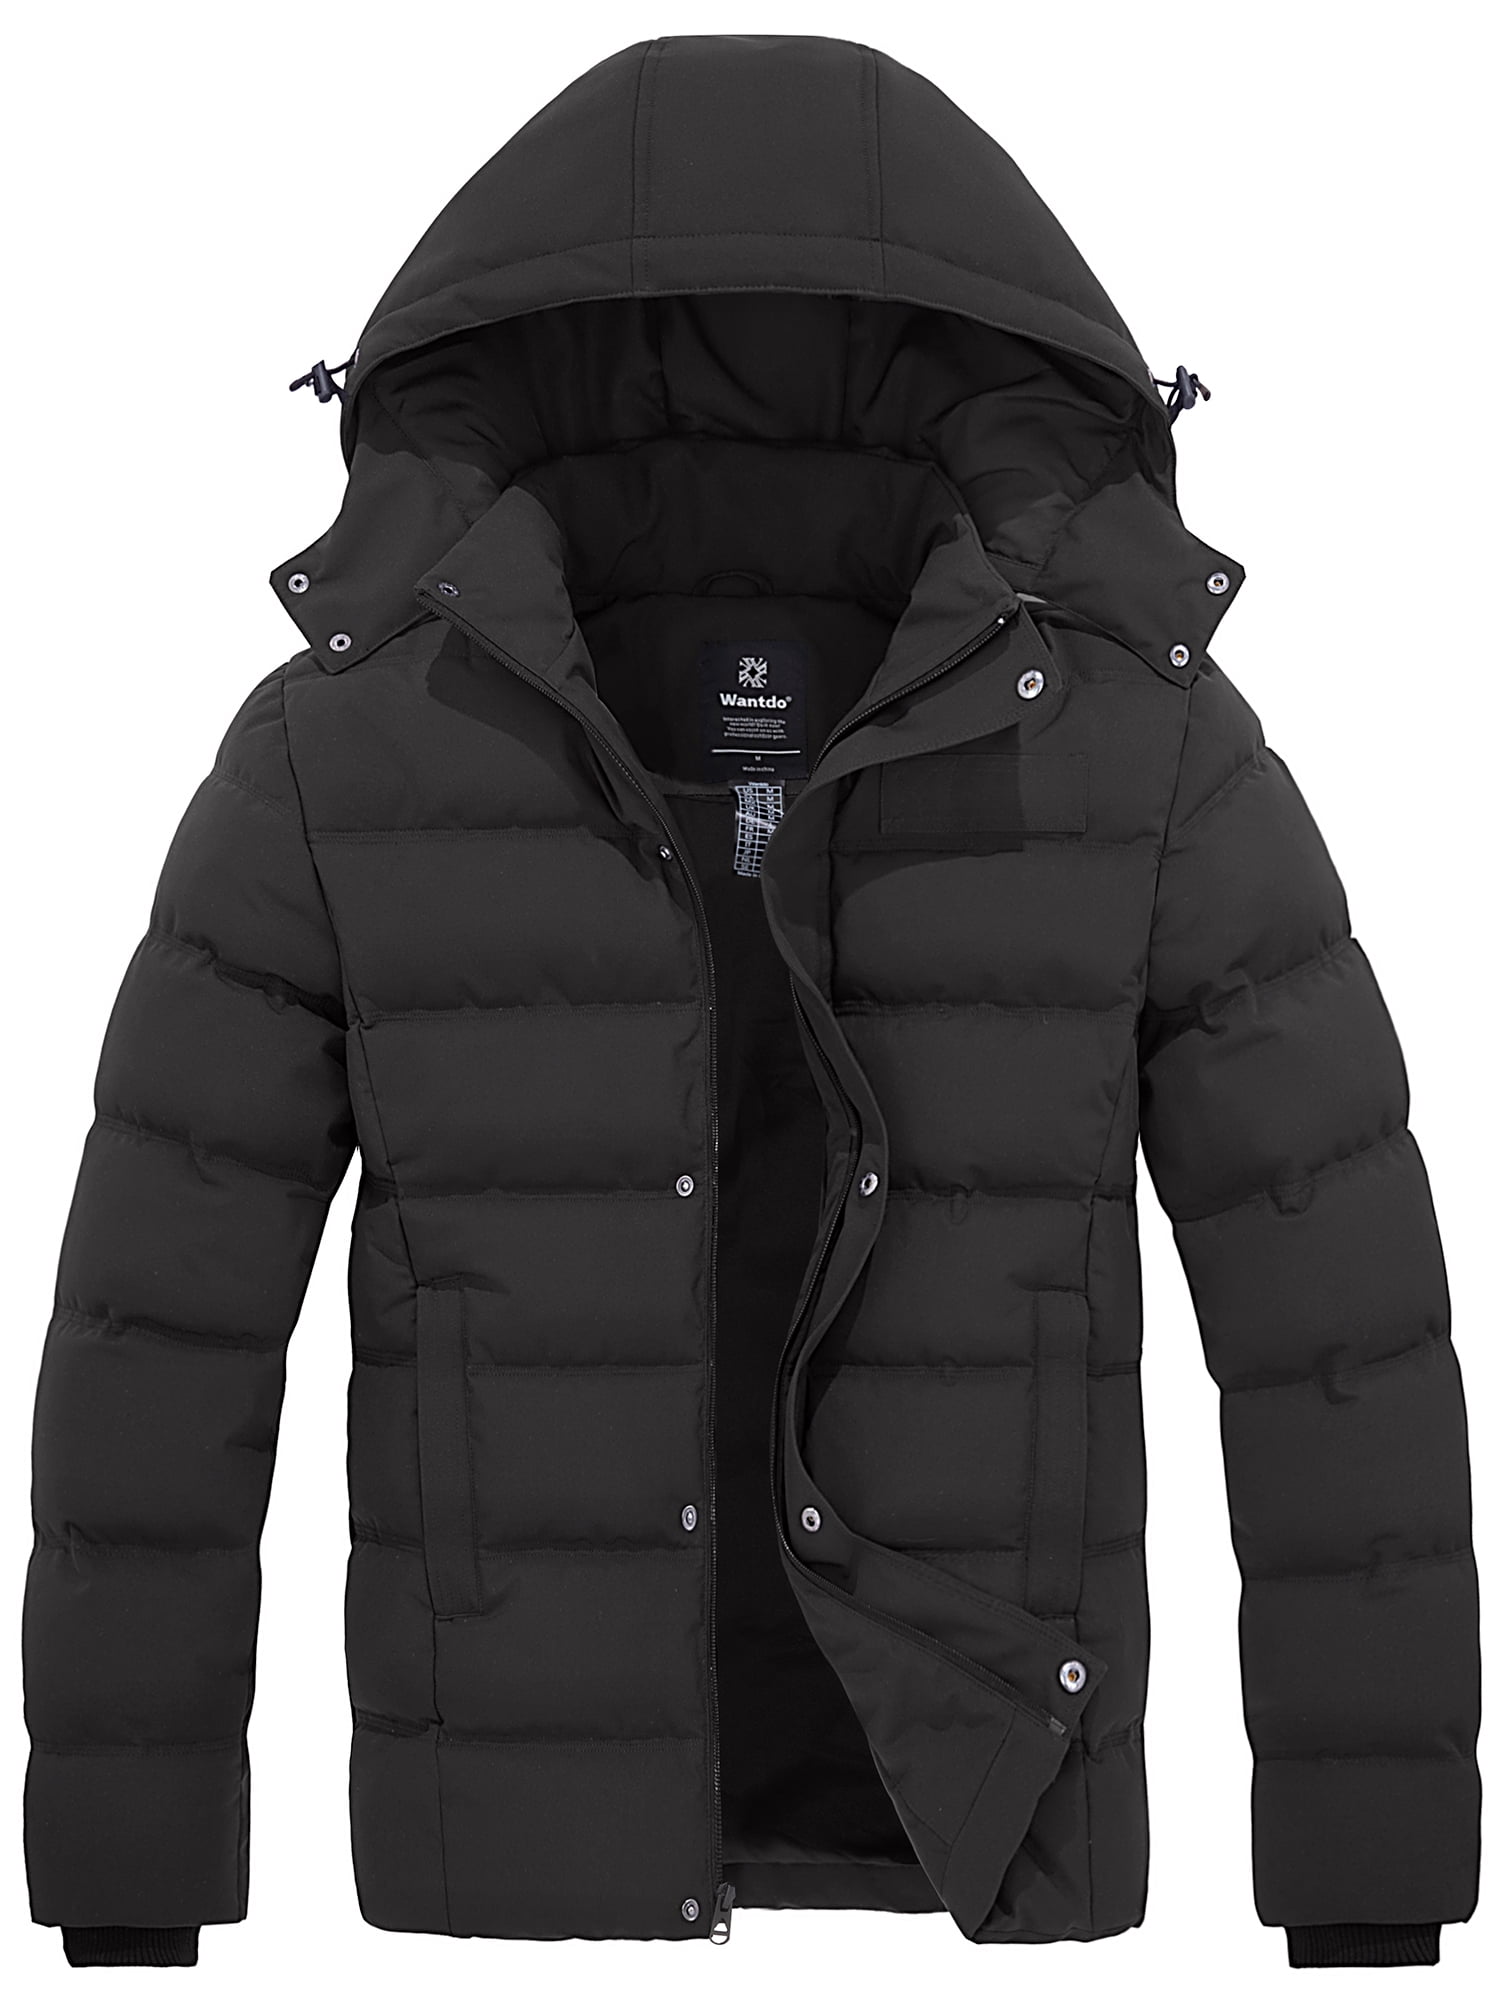 Wantdo Men's Winter Jacket Quilted Puffer Coat Waterproof Puffer